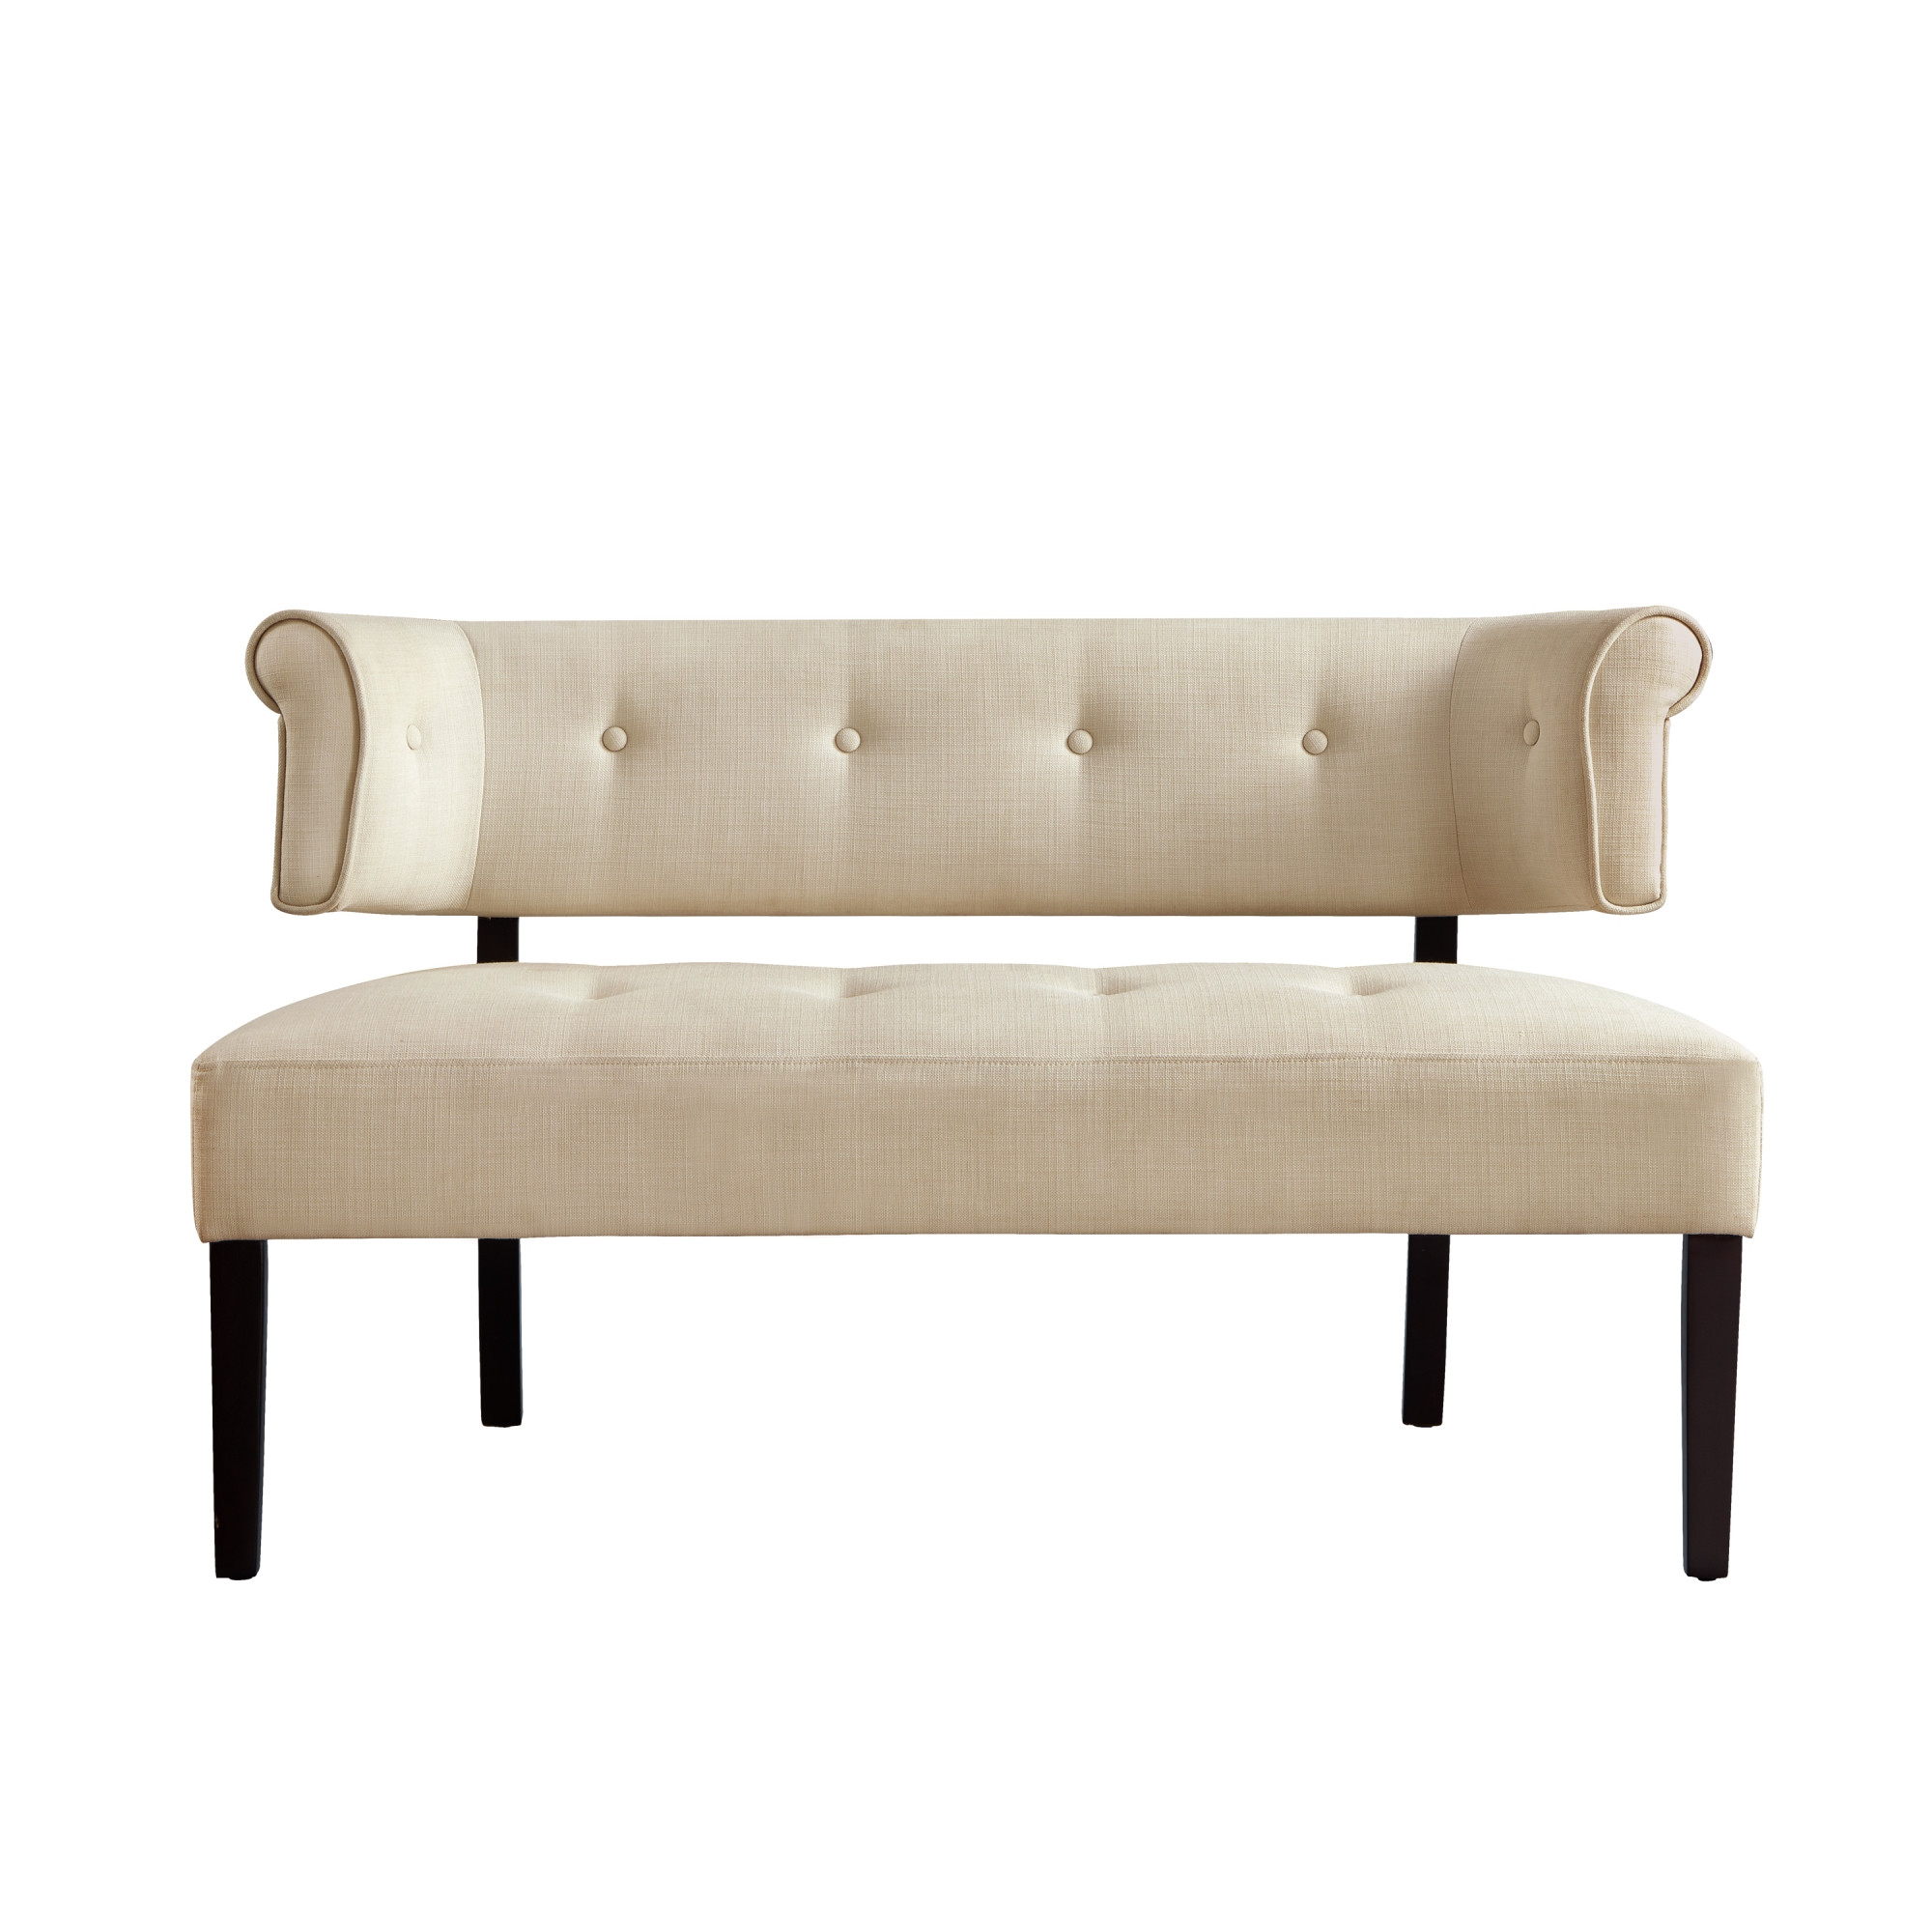 48" Beige And Black Upholstered Linen Bench-490925-1